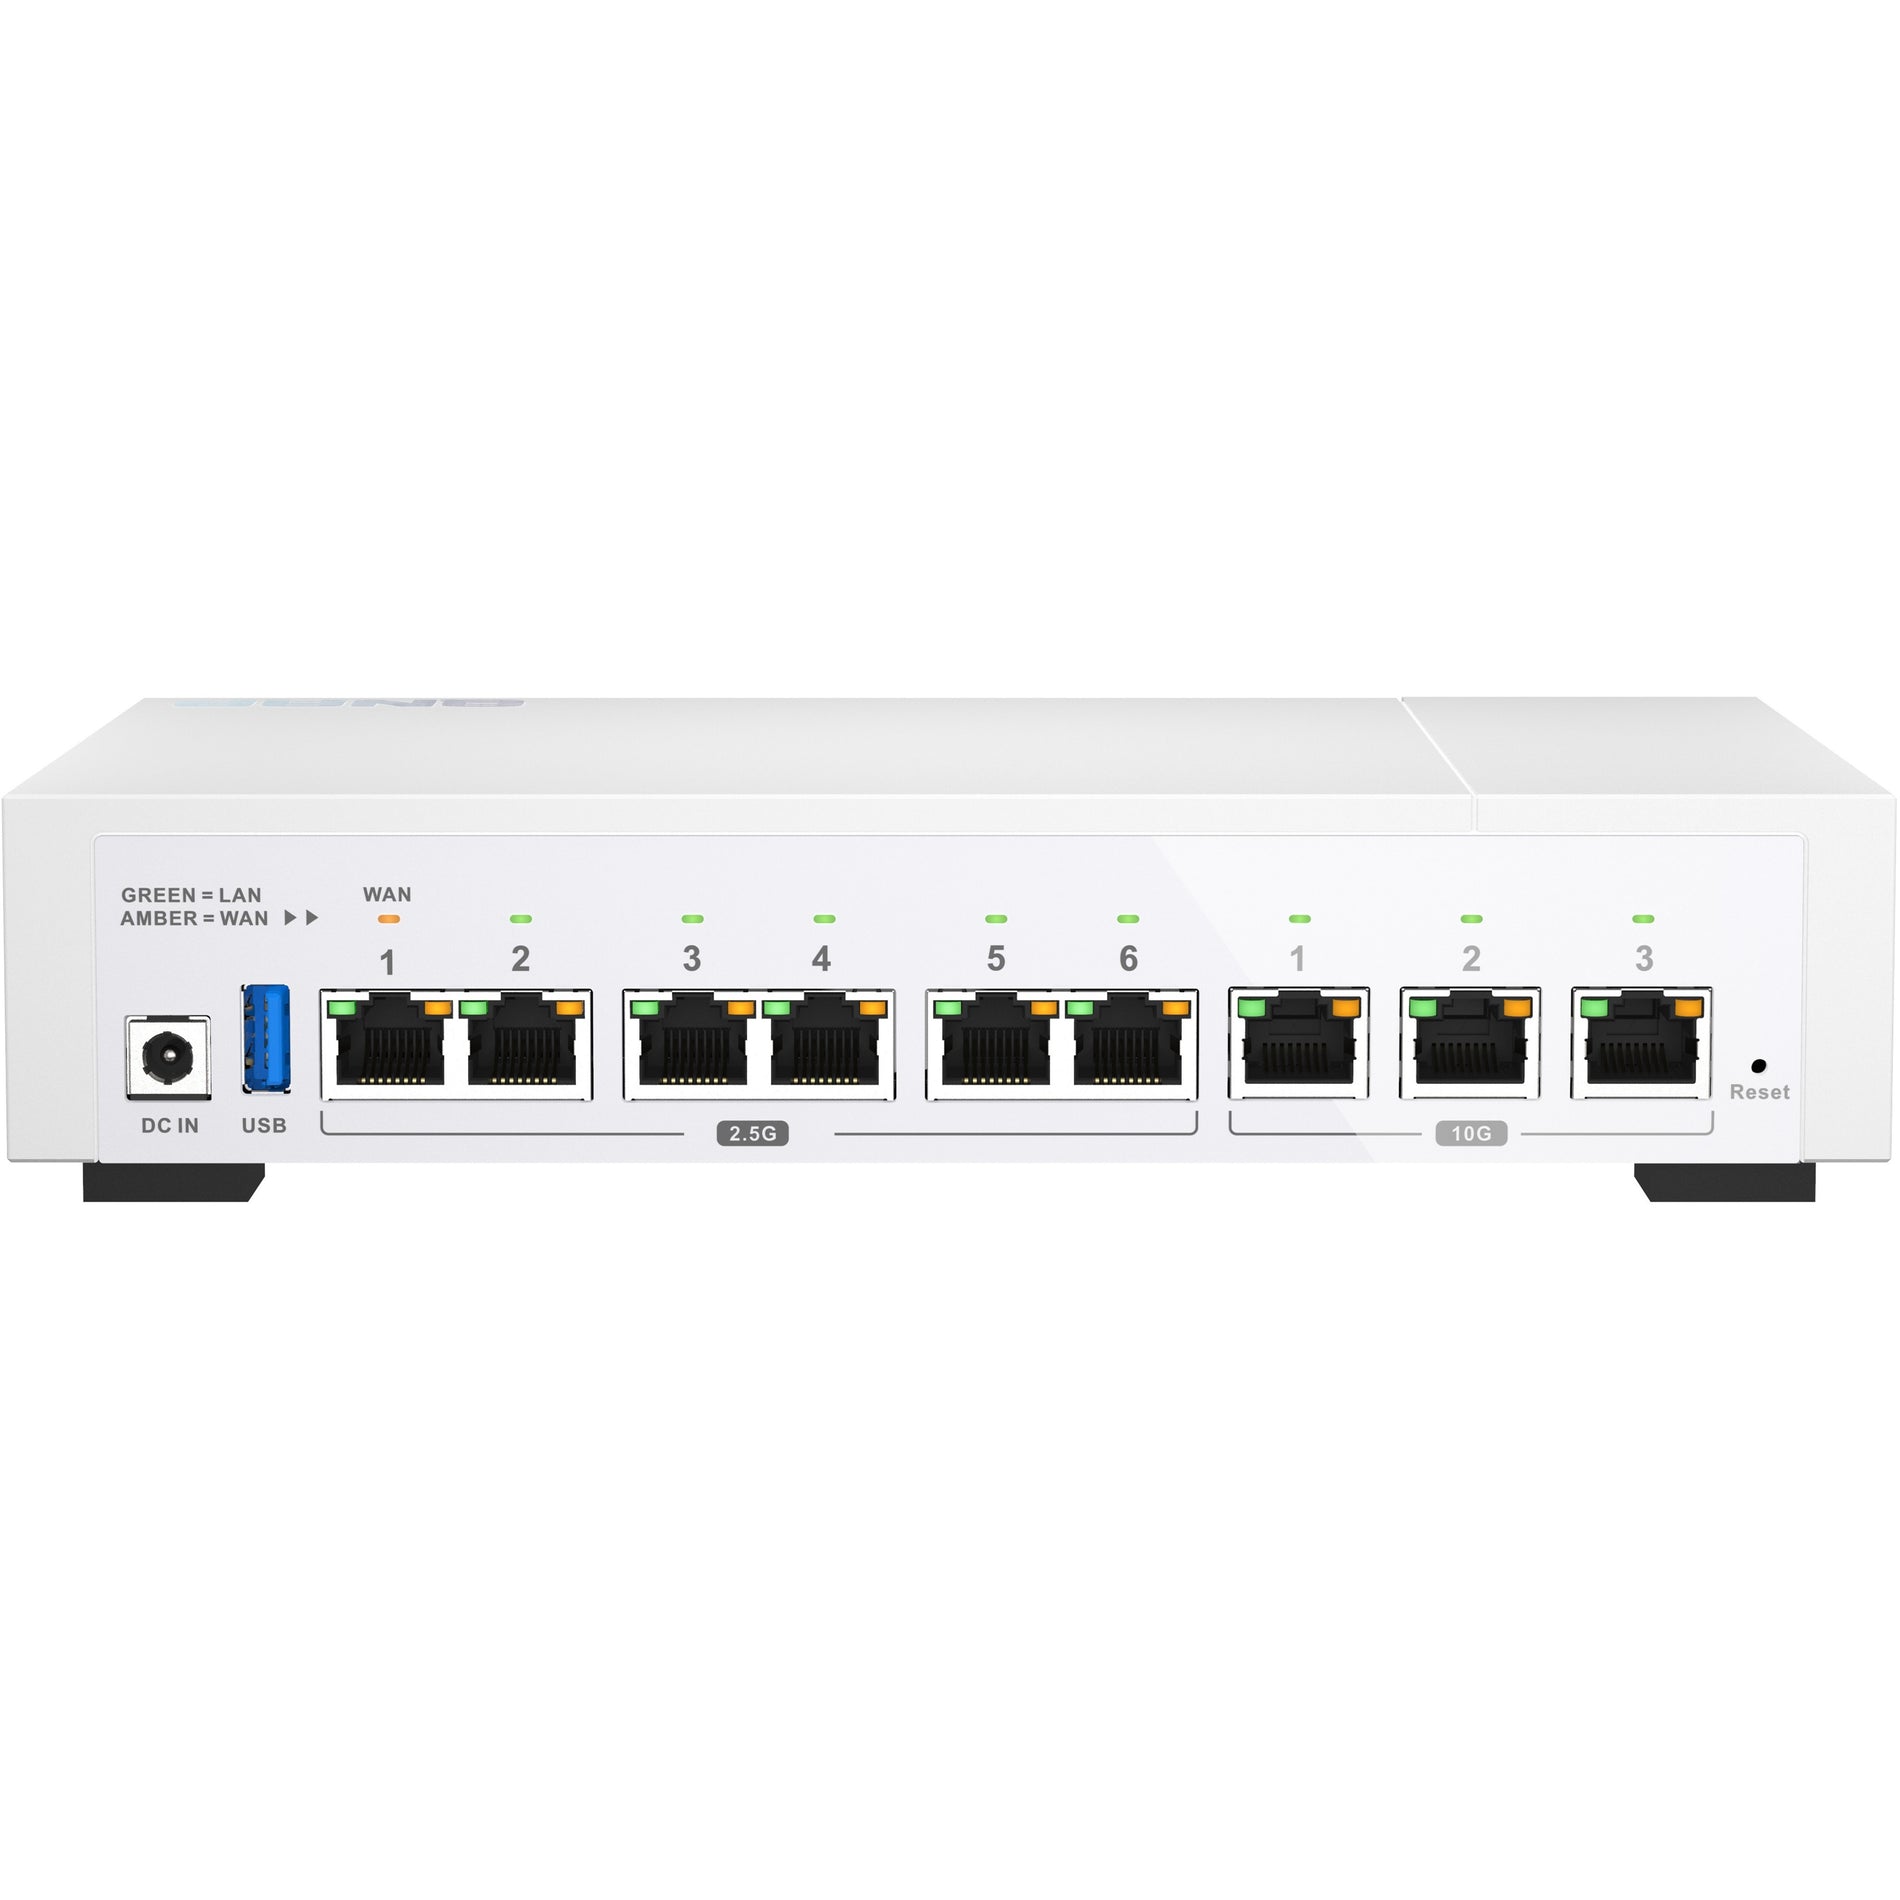 QNAP QHORA-322-US QHora-322 Wireless Router, 10 Gigabit Ethernet, 6 Network Ports, 3 Broadband Ports